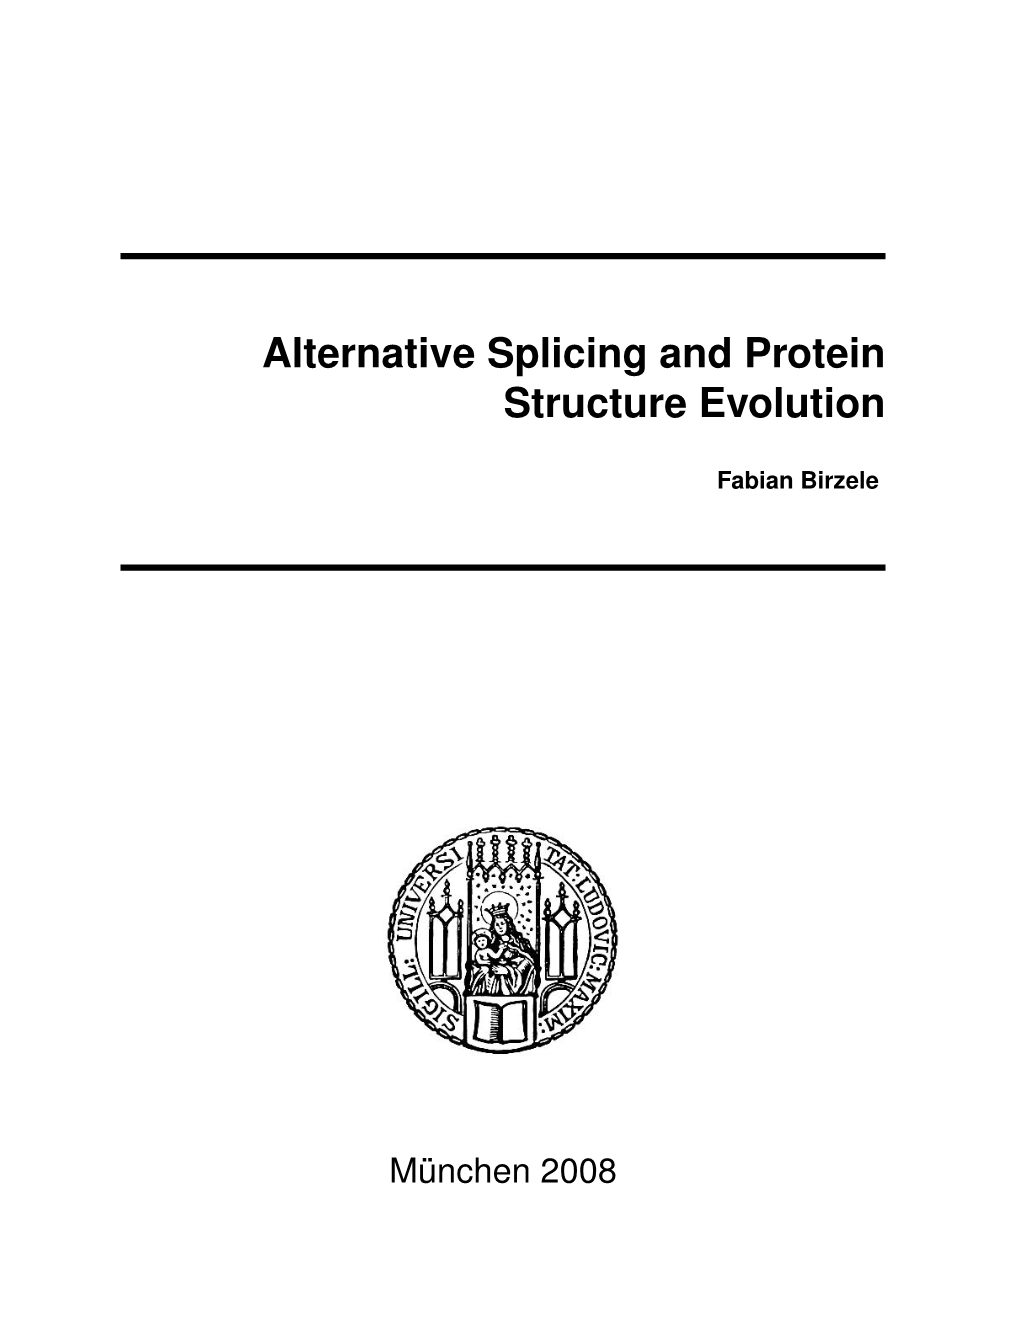 Alternative Splicing and Protein Structure Evolution